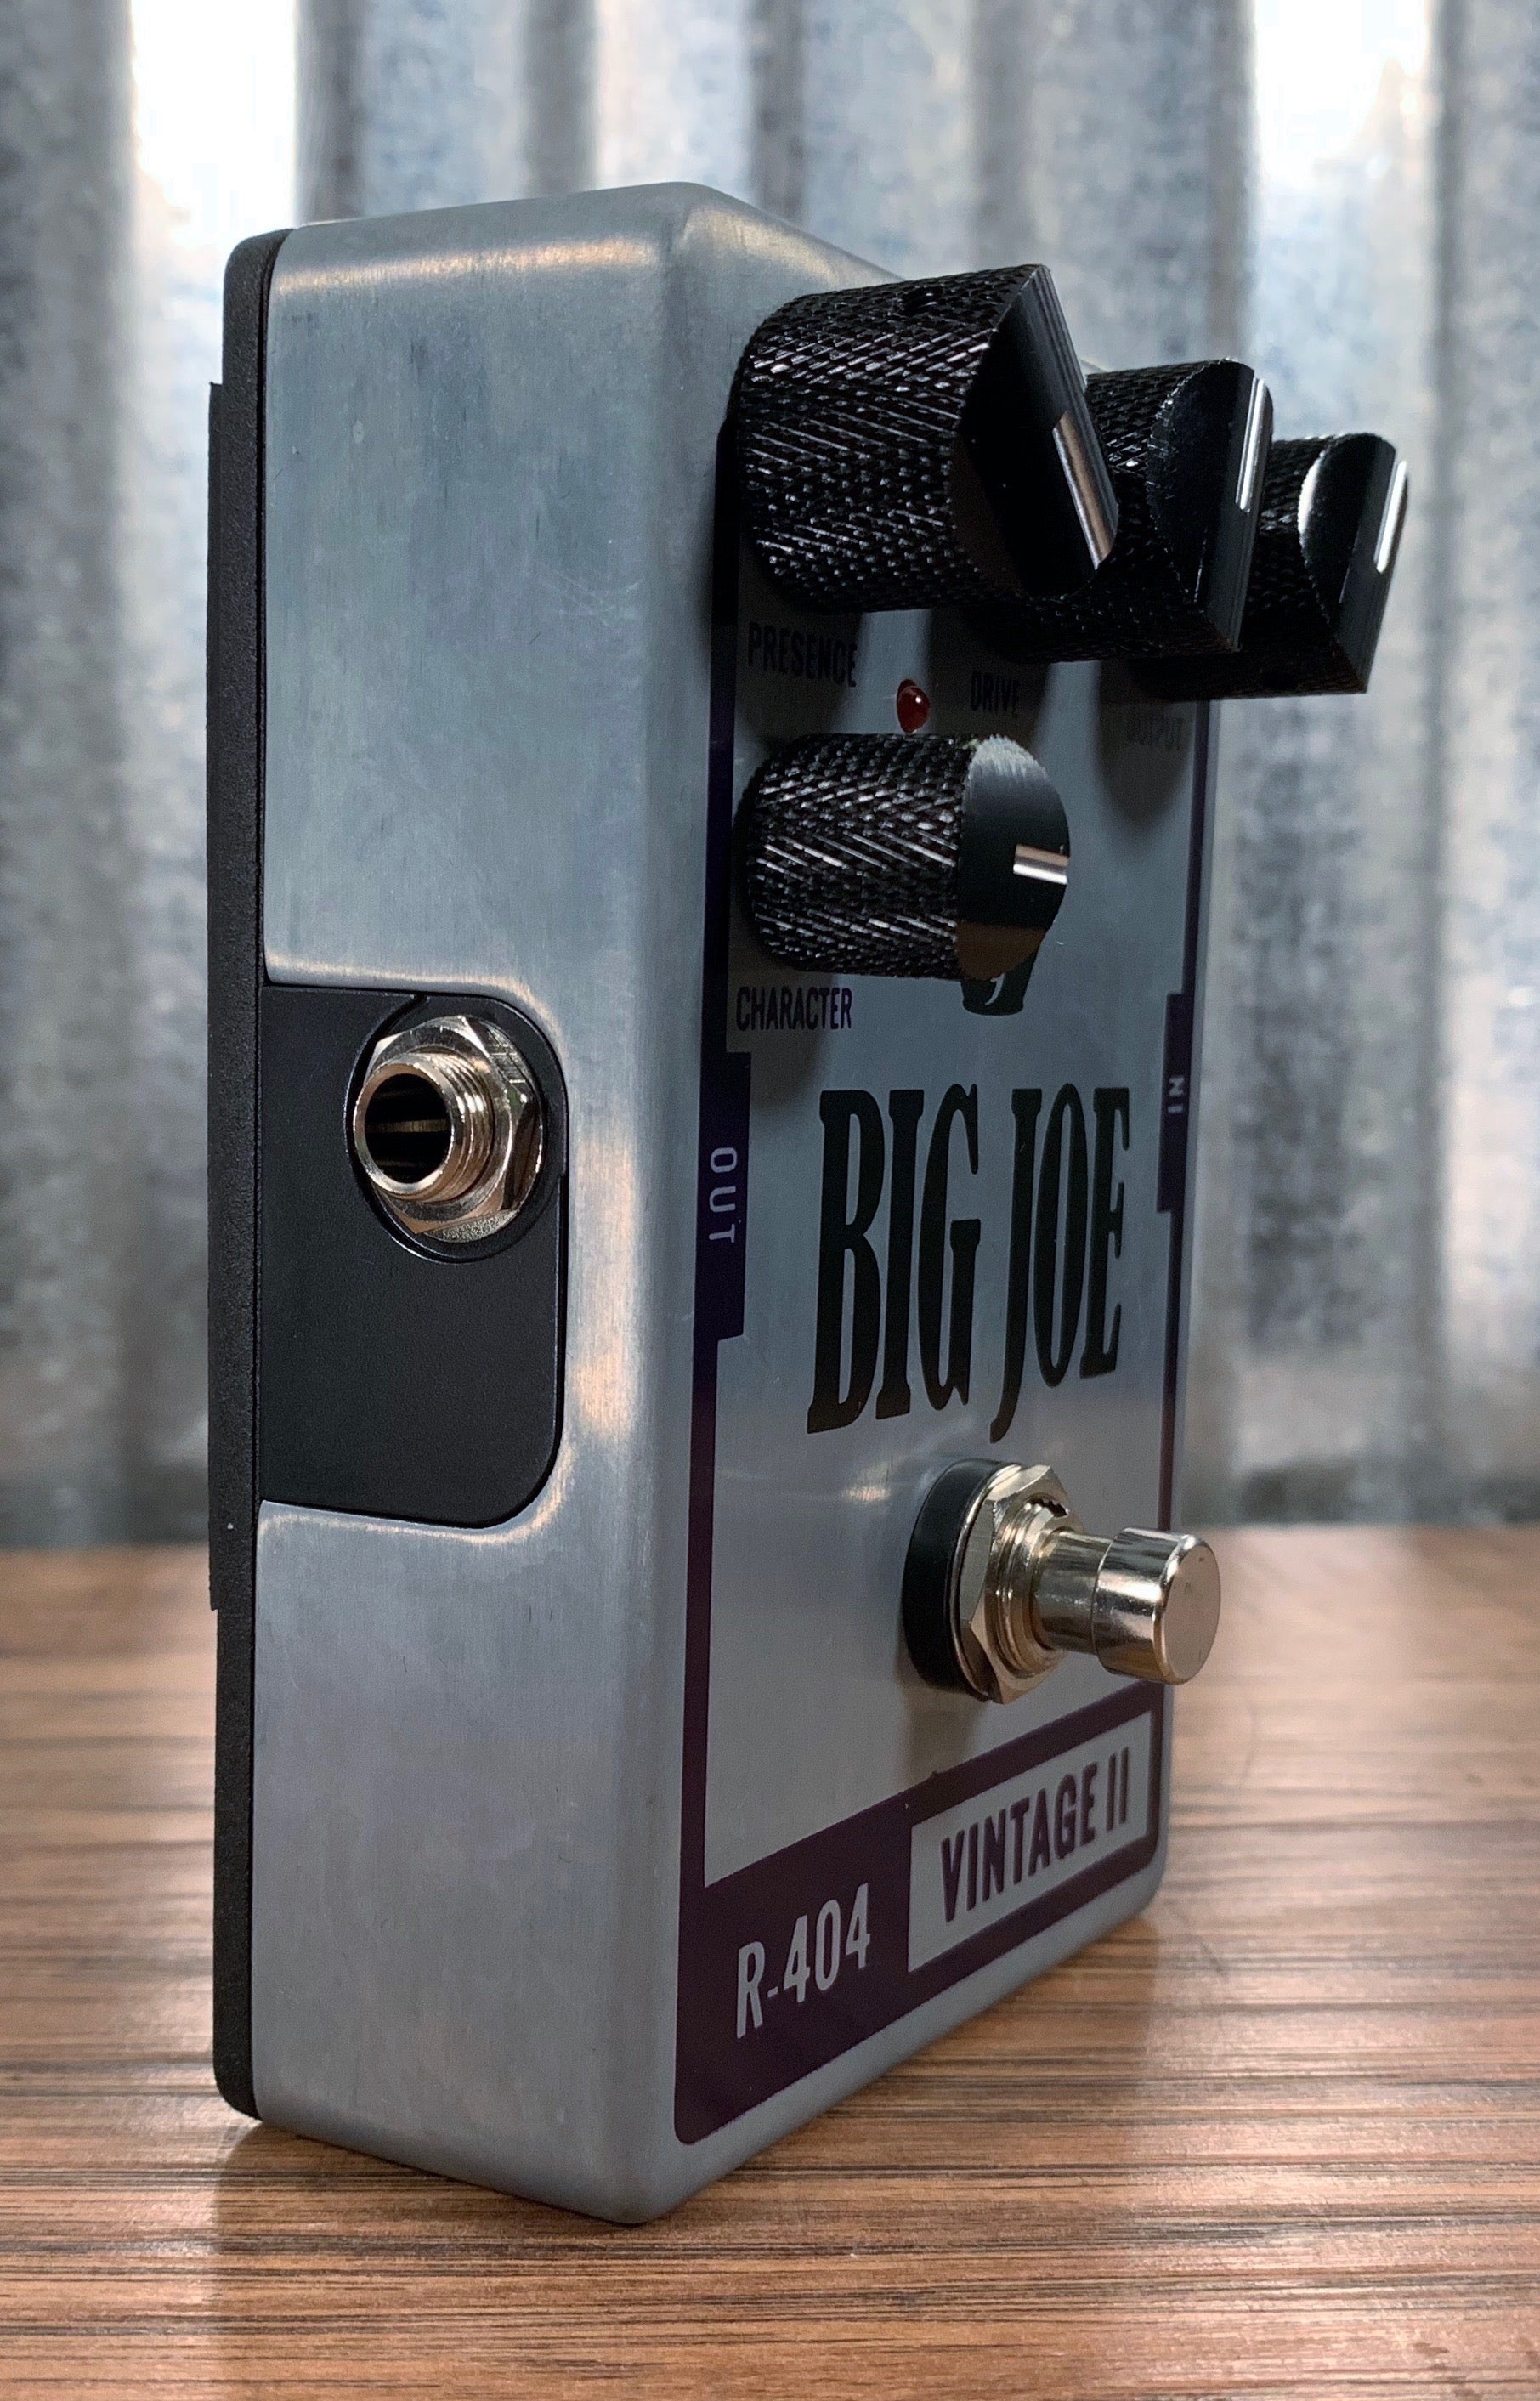 Big Joe Stomp Box Analog Vintage II R-404 Raw Series Overdrive Guitar